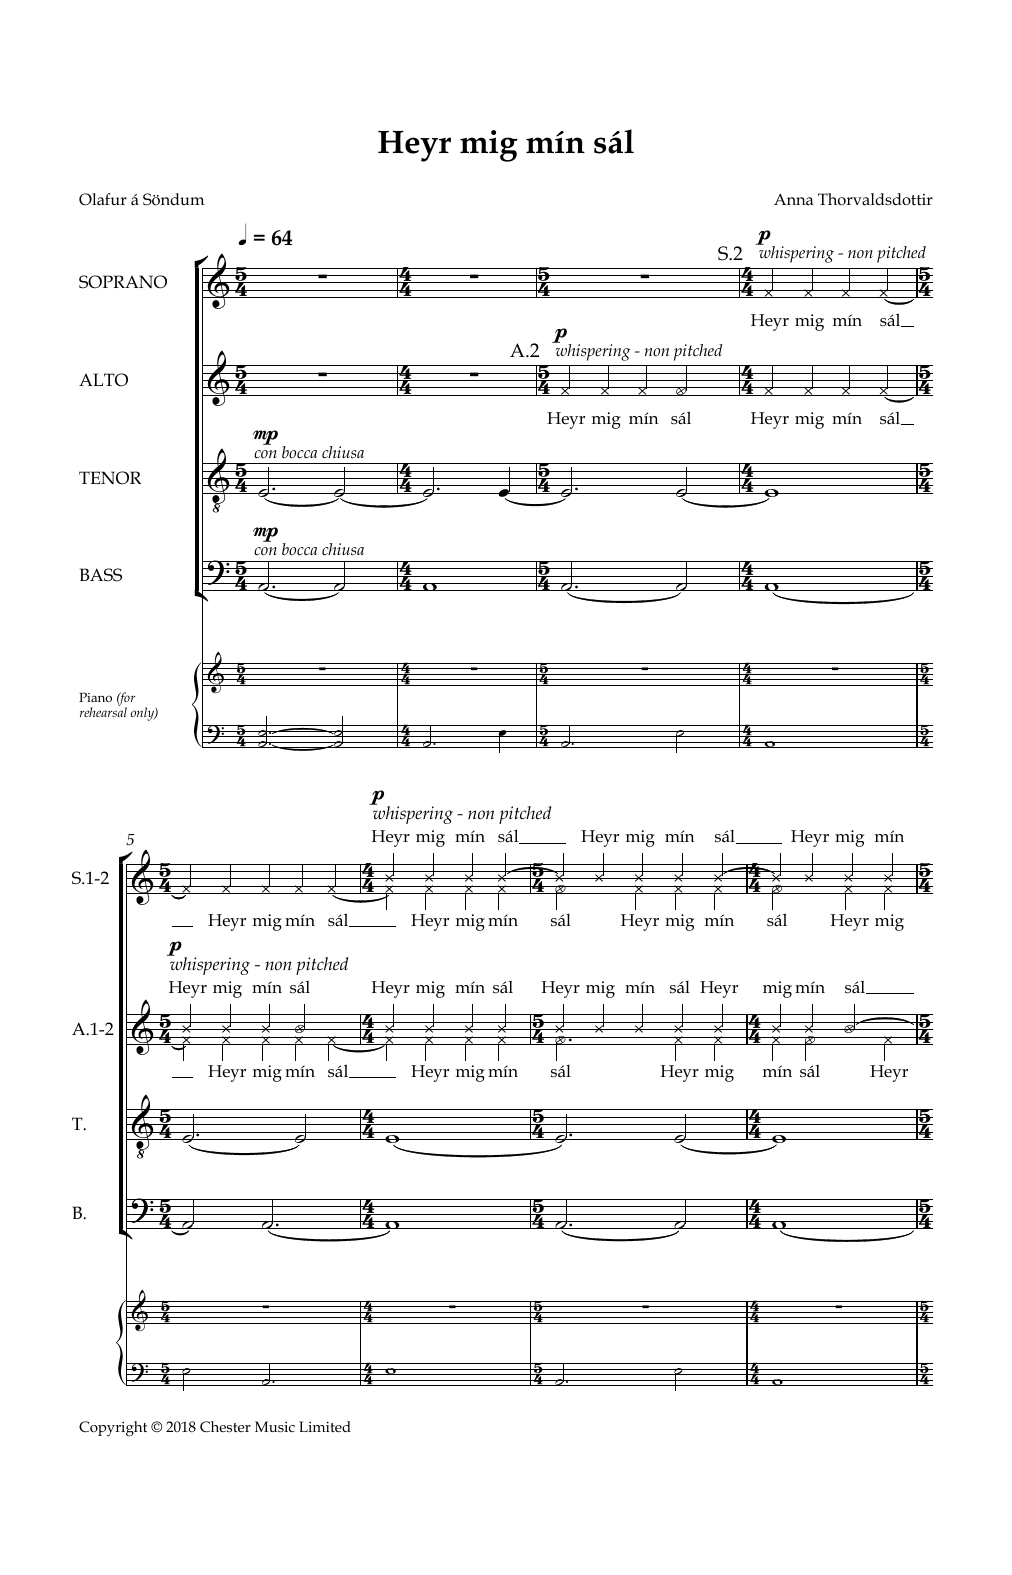 Anna Thorvaldsdottir Heyr Mig Min Sal Sheet Music Notes & Chords for SATB Choir - Download or Print PDF